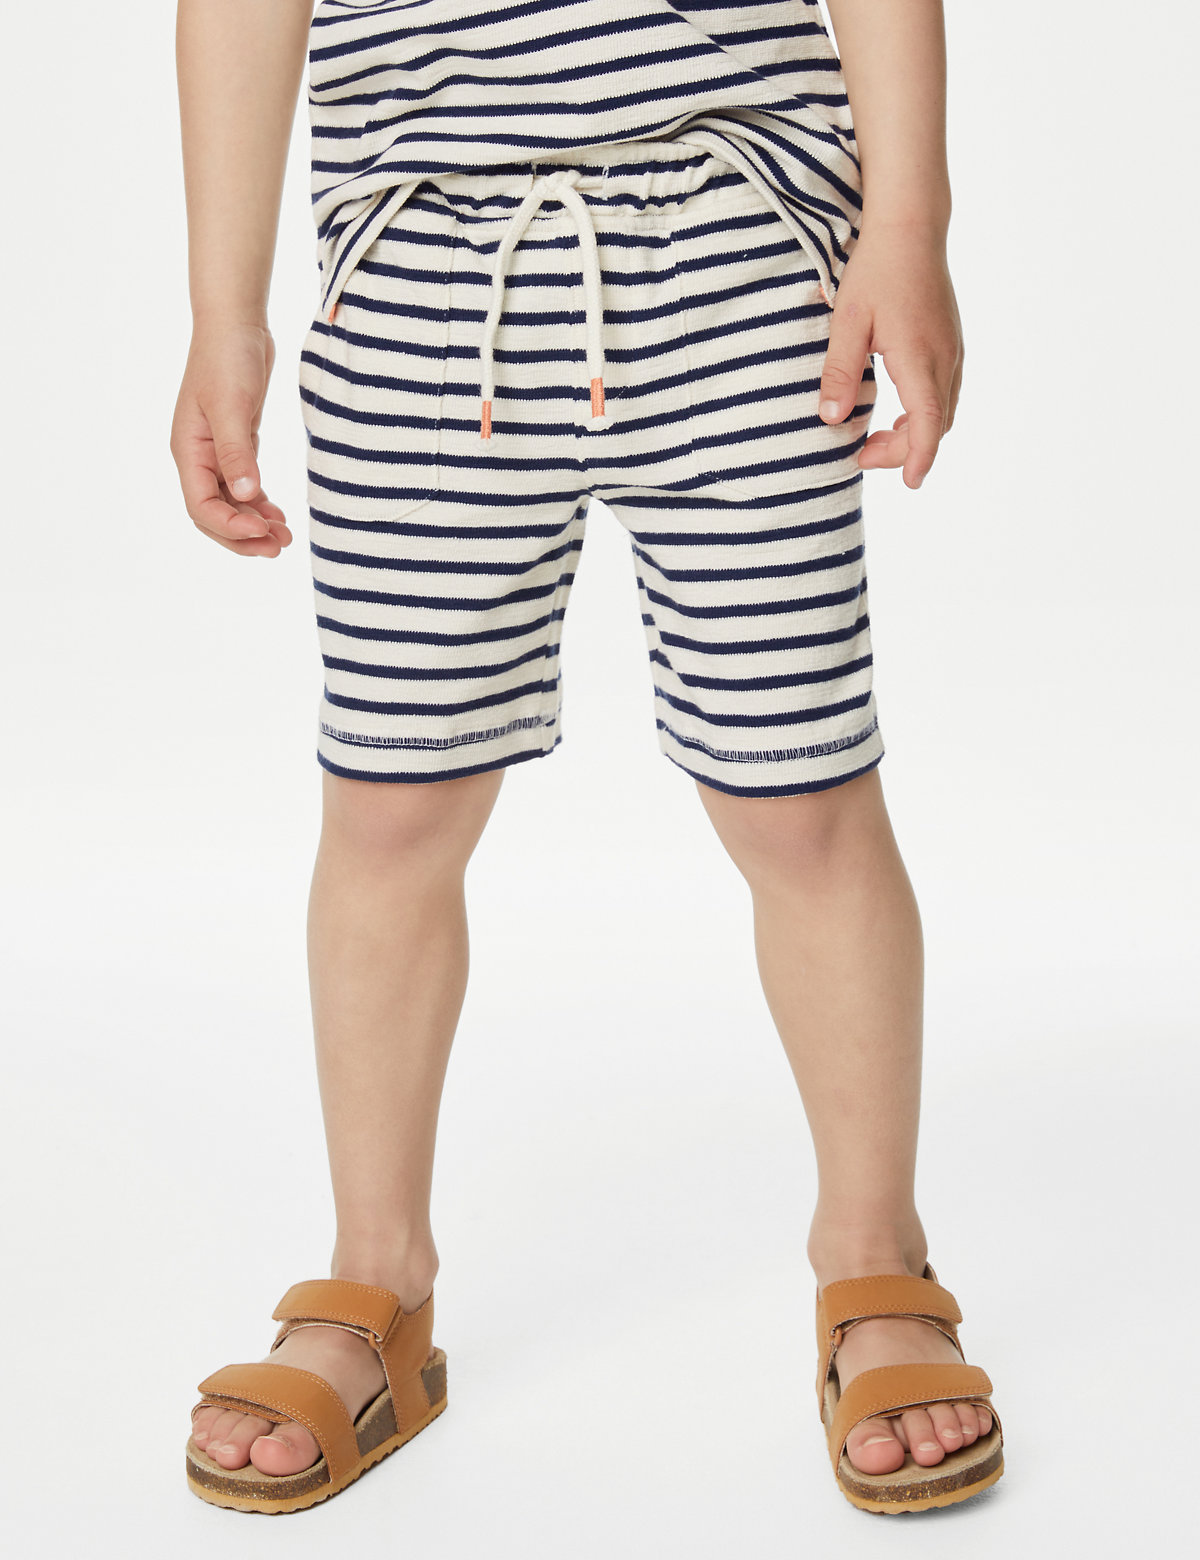 Pure Cotton Striped Shorts (2-8 Yrs)